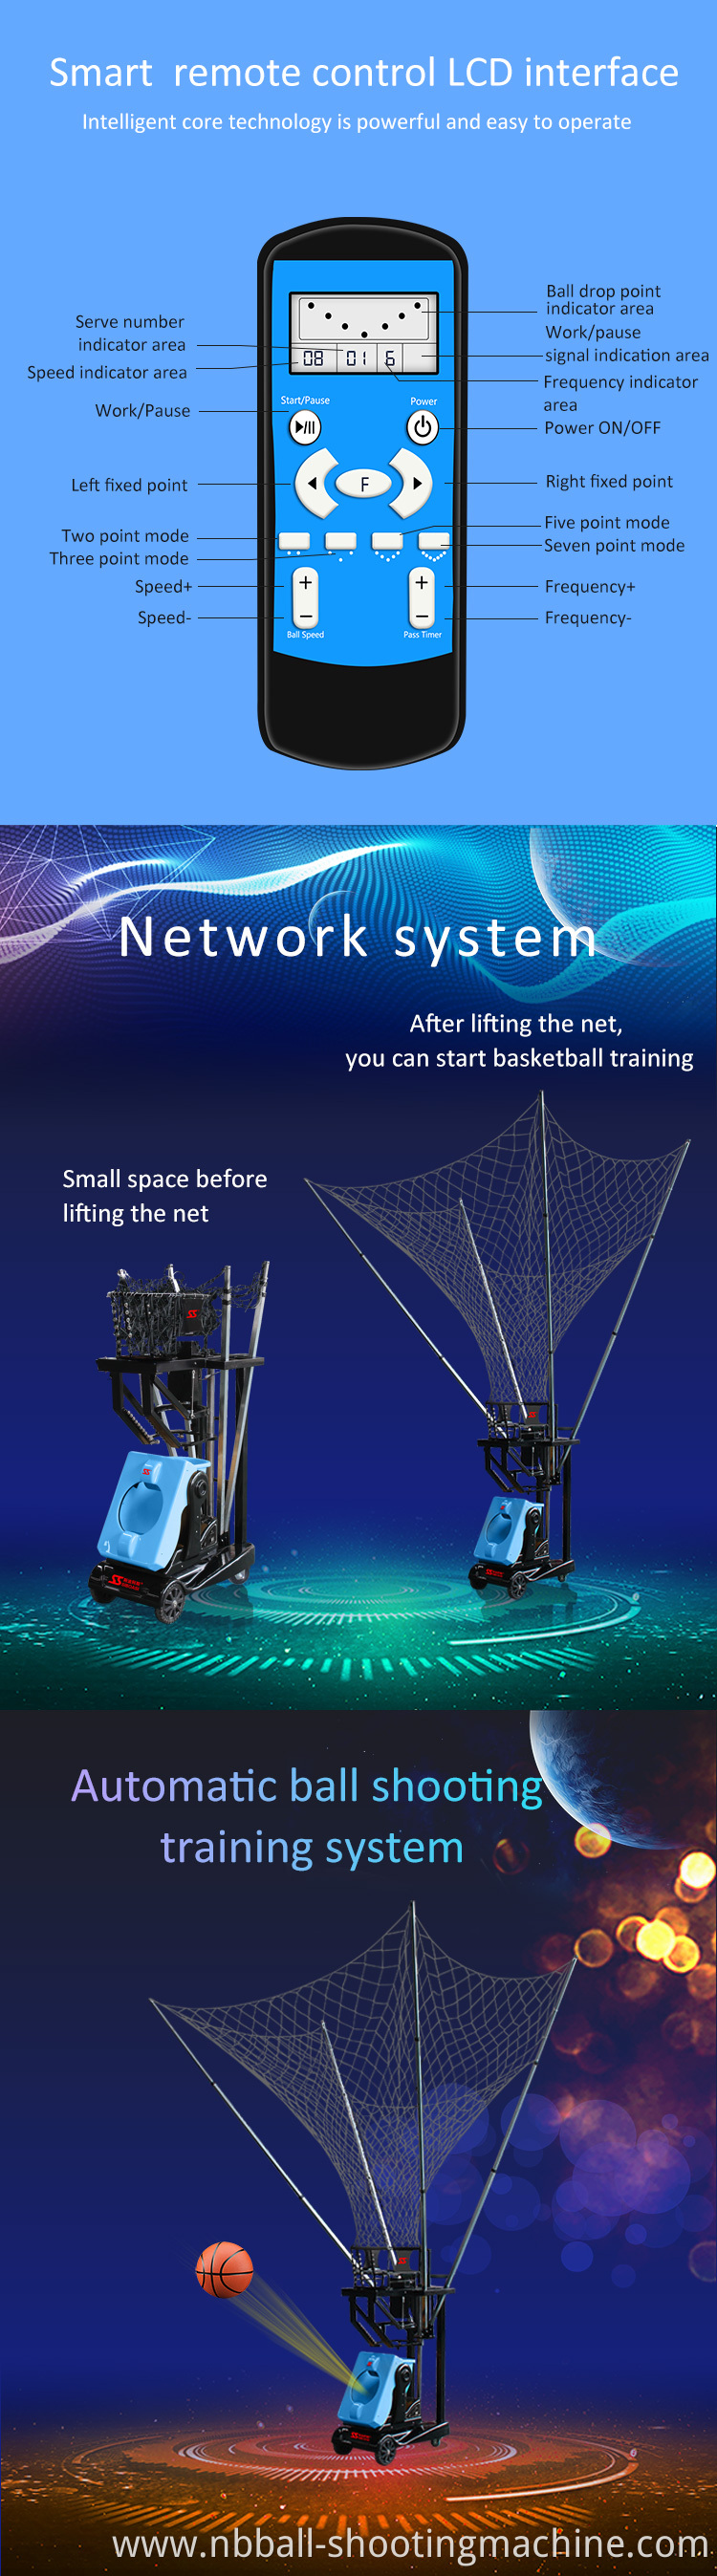 Machine gun basketball drill shooting drills craigslist with wireless remote